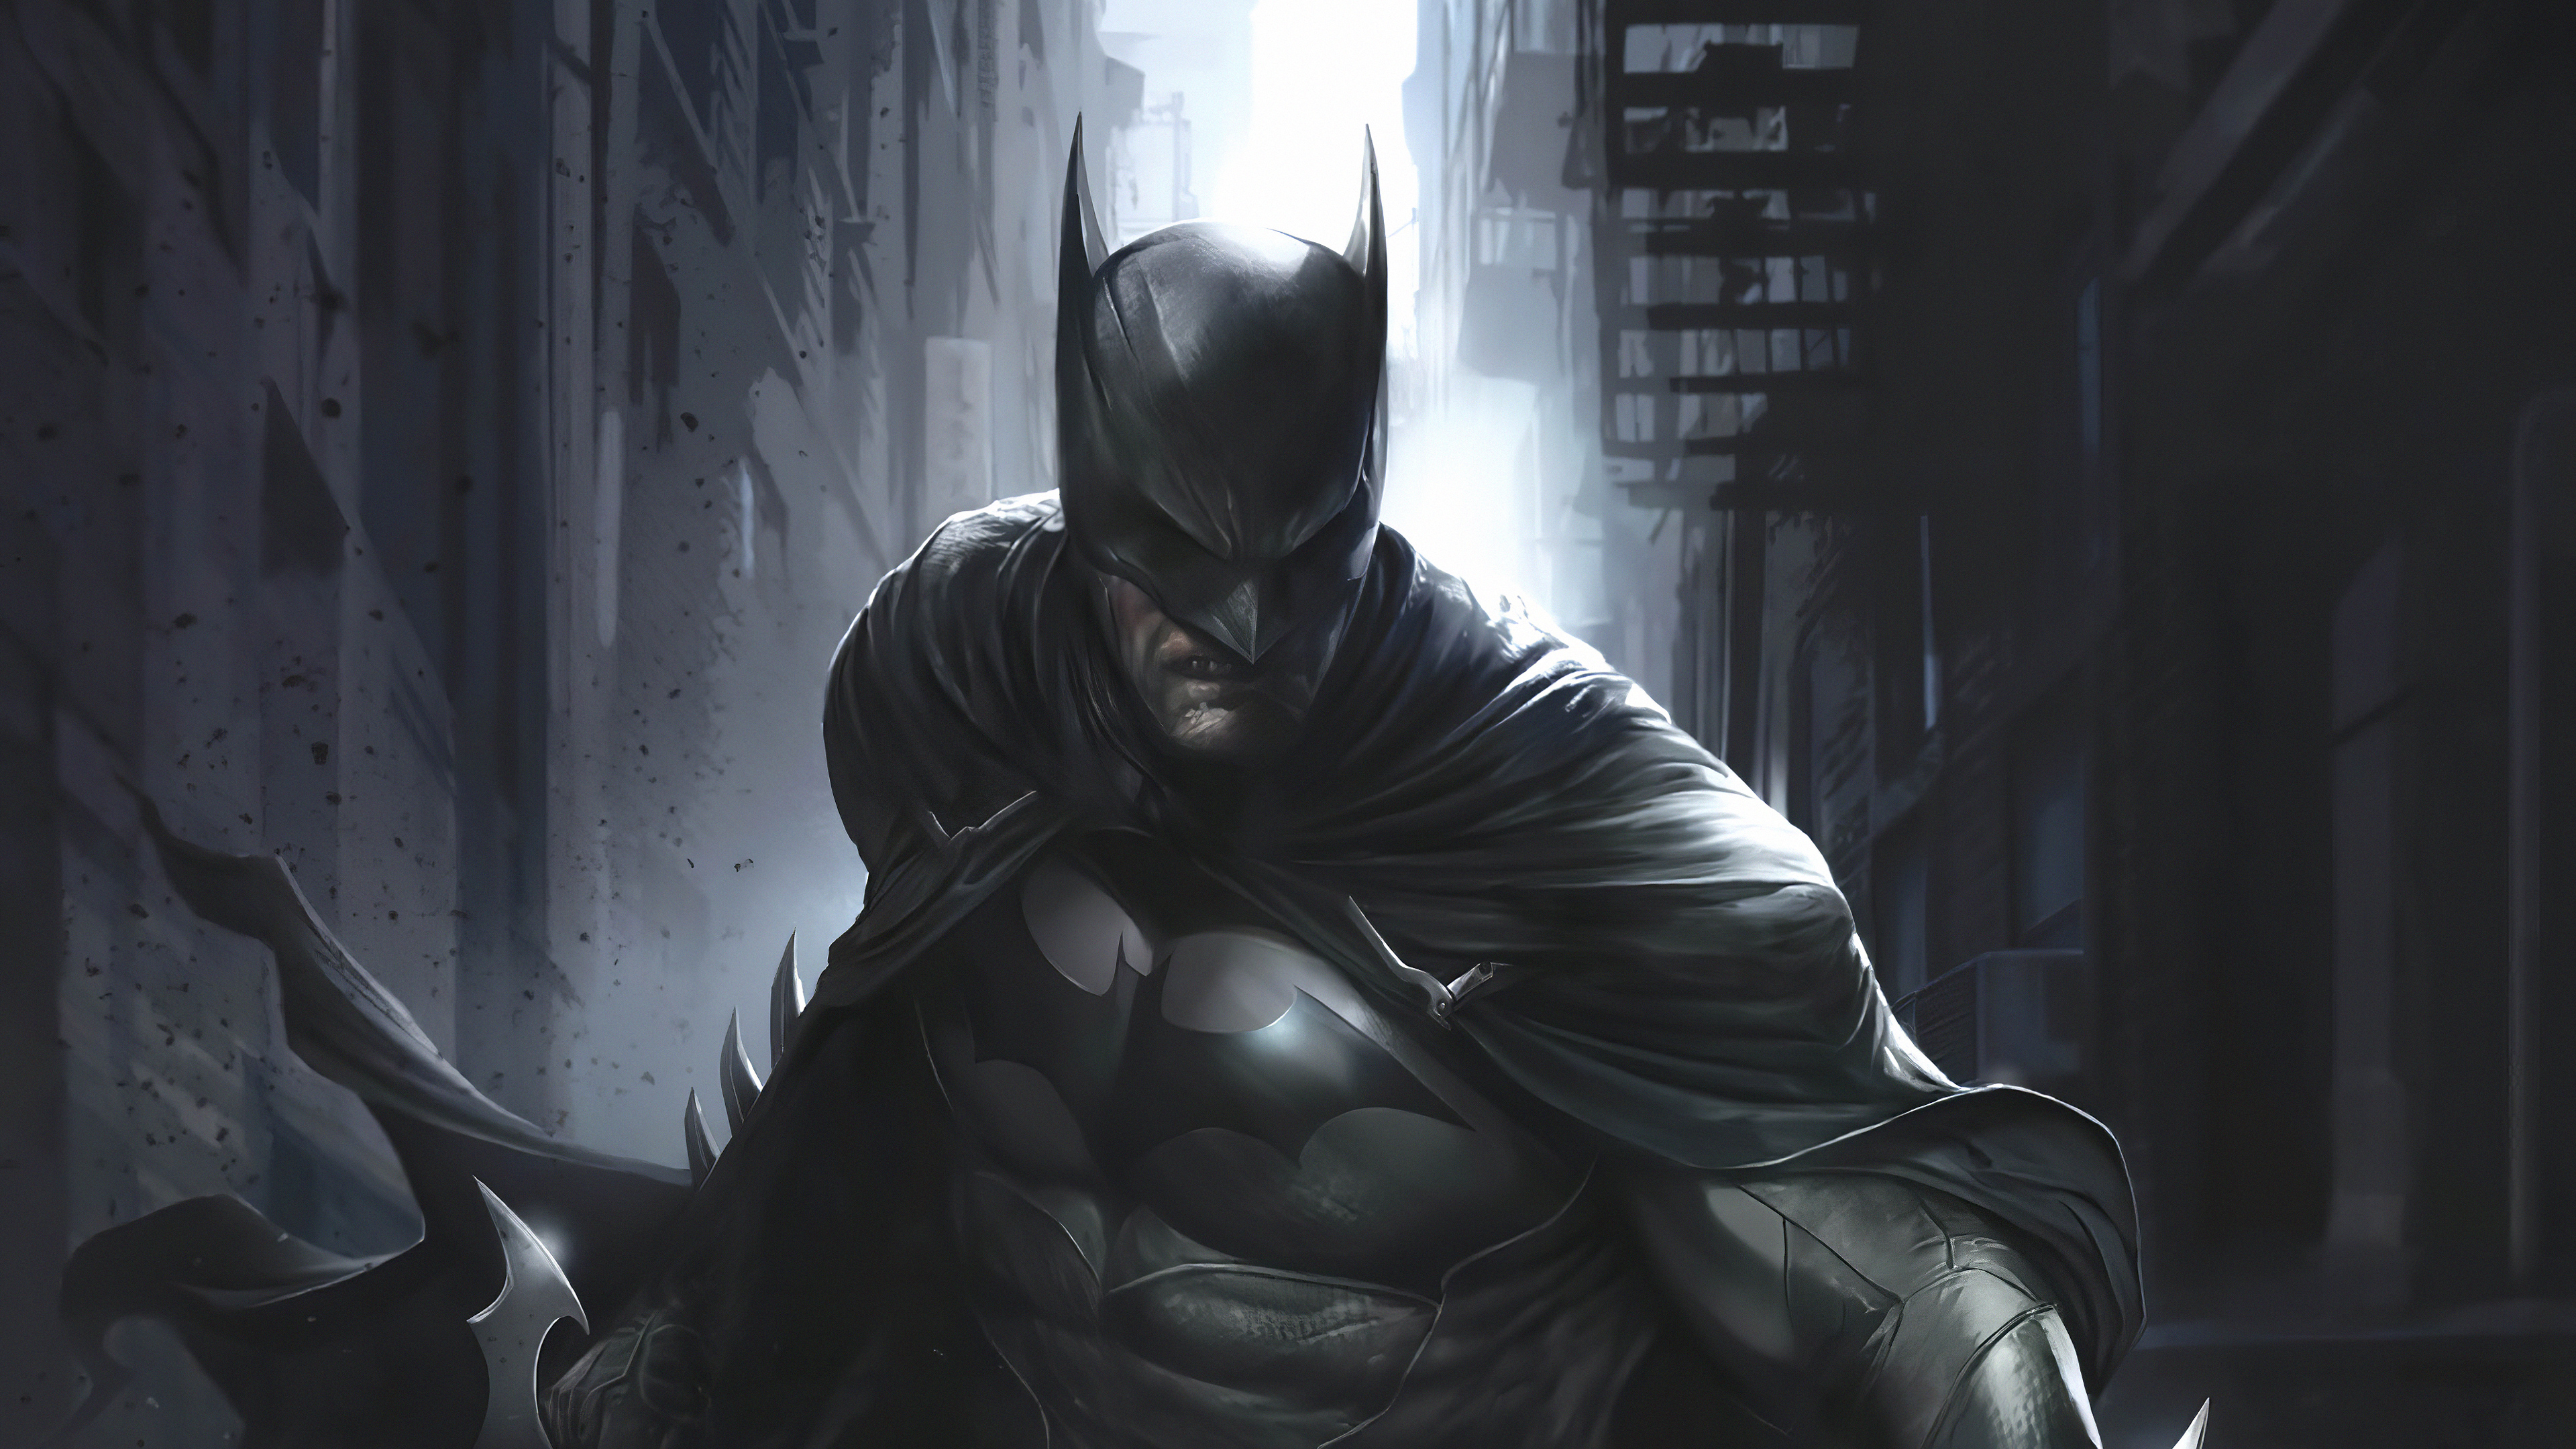 Free download Wallpaper 4k Batman Art 2020 Batman 4k hd wallpaper